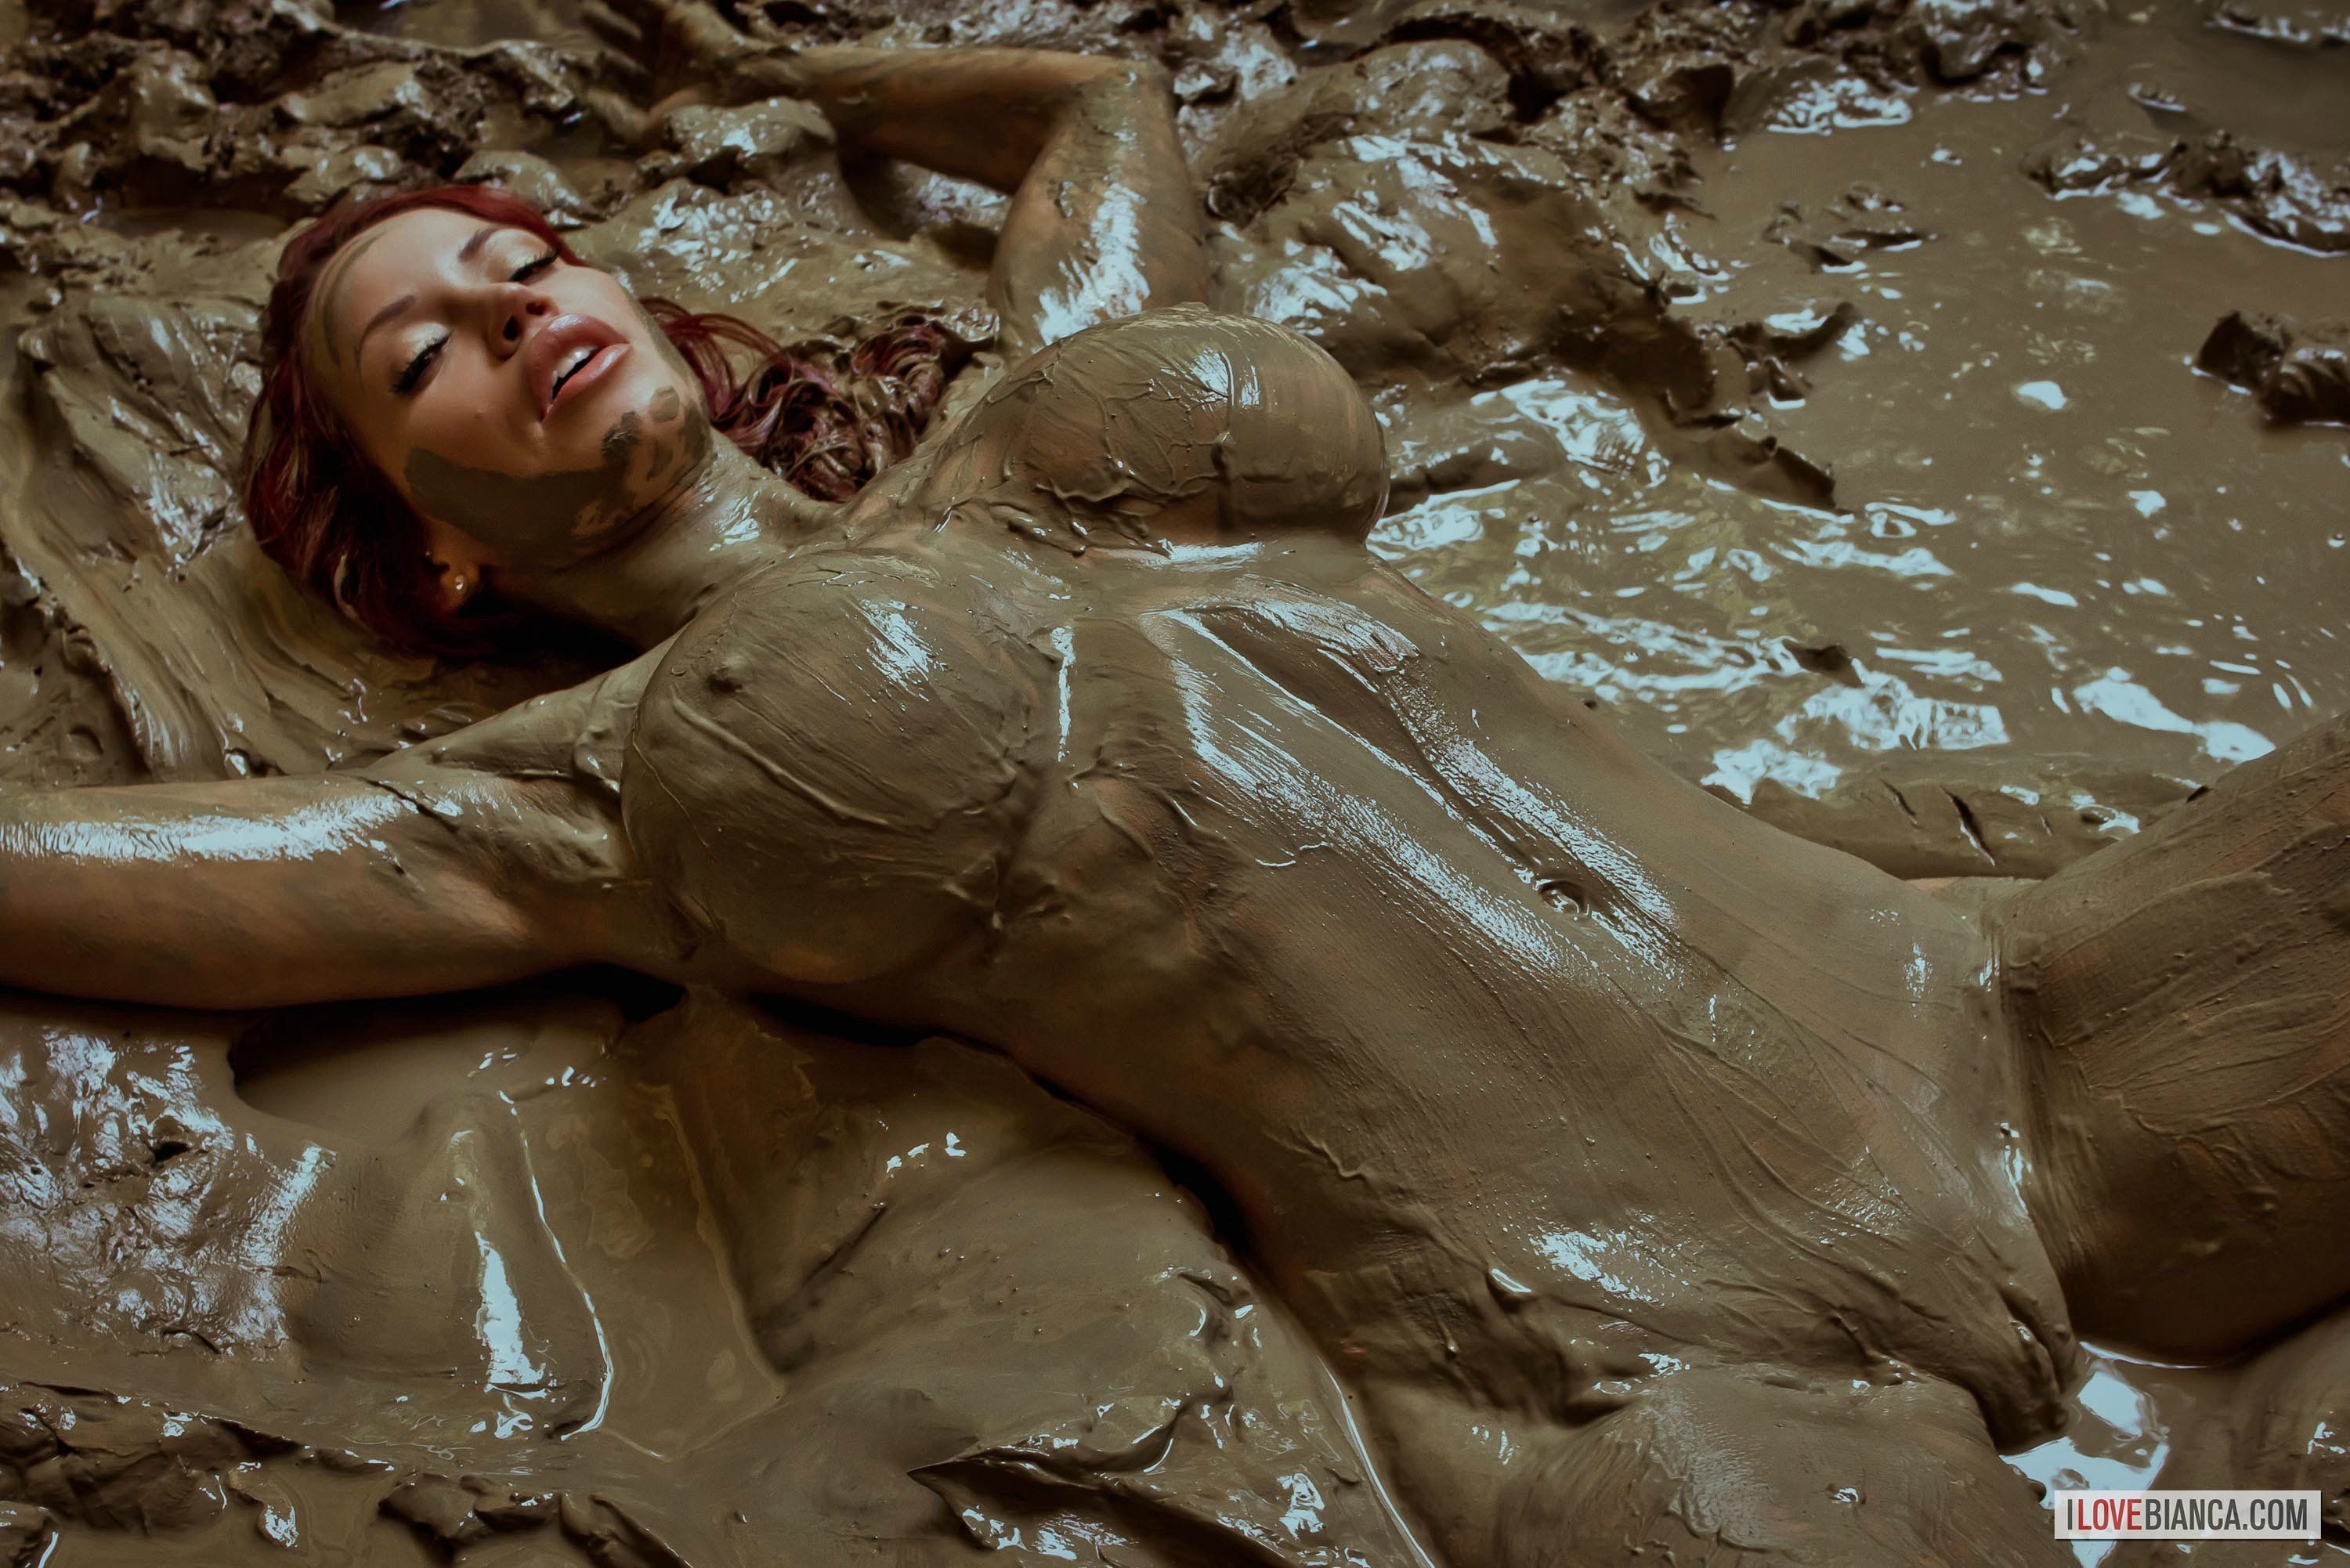 Naked women in mud tumblr - Real Naked Girls